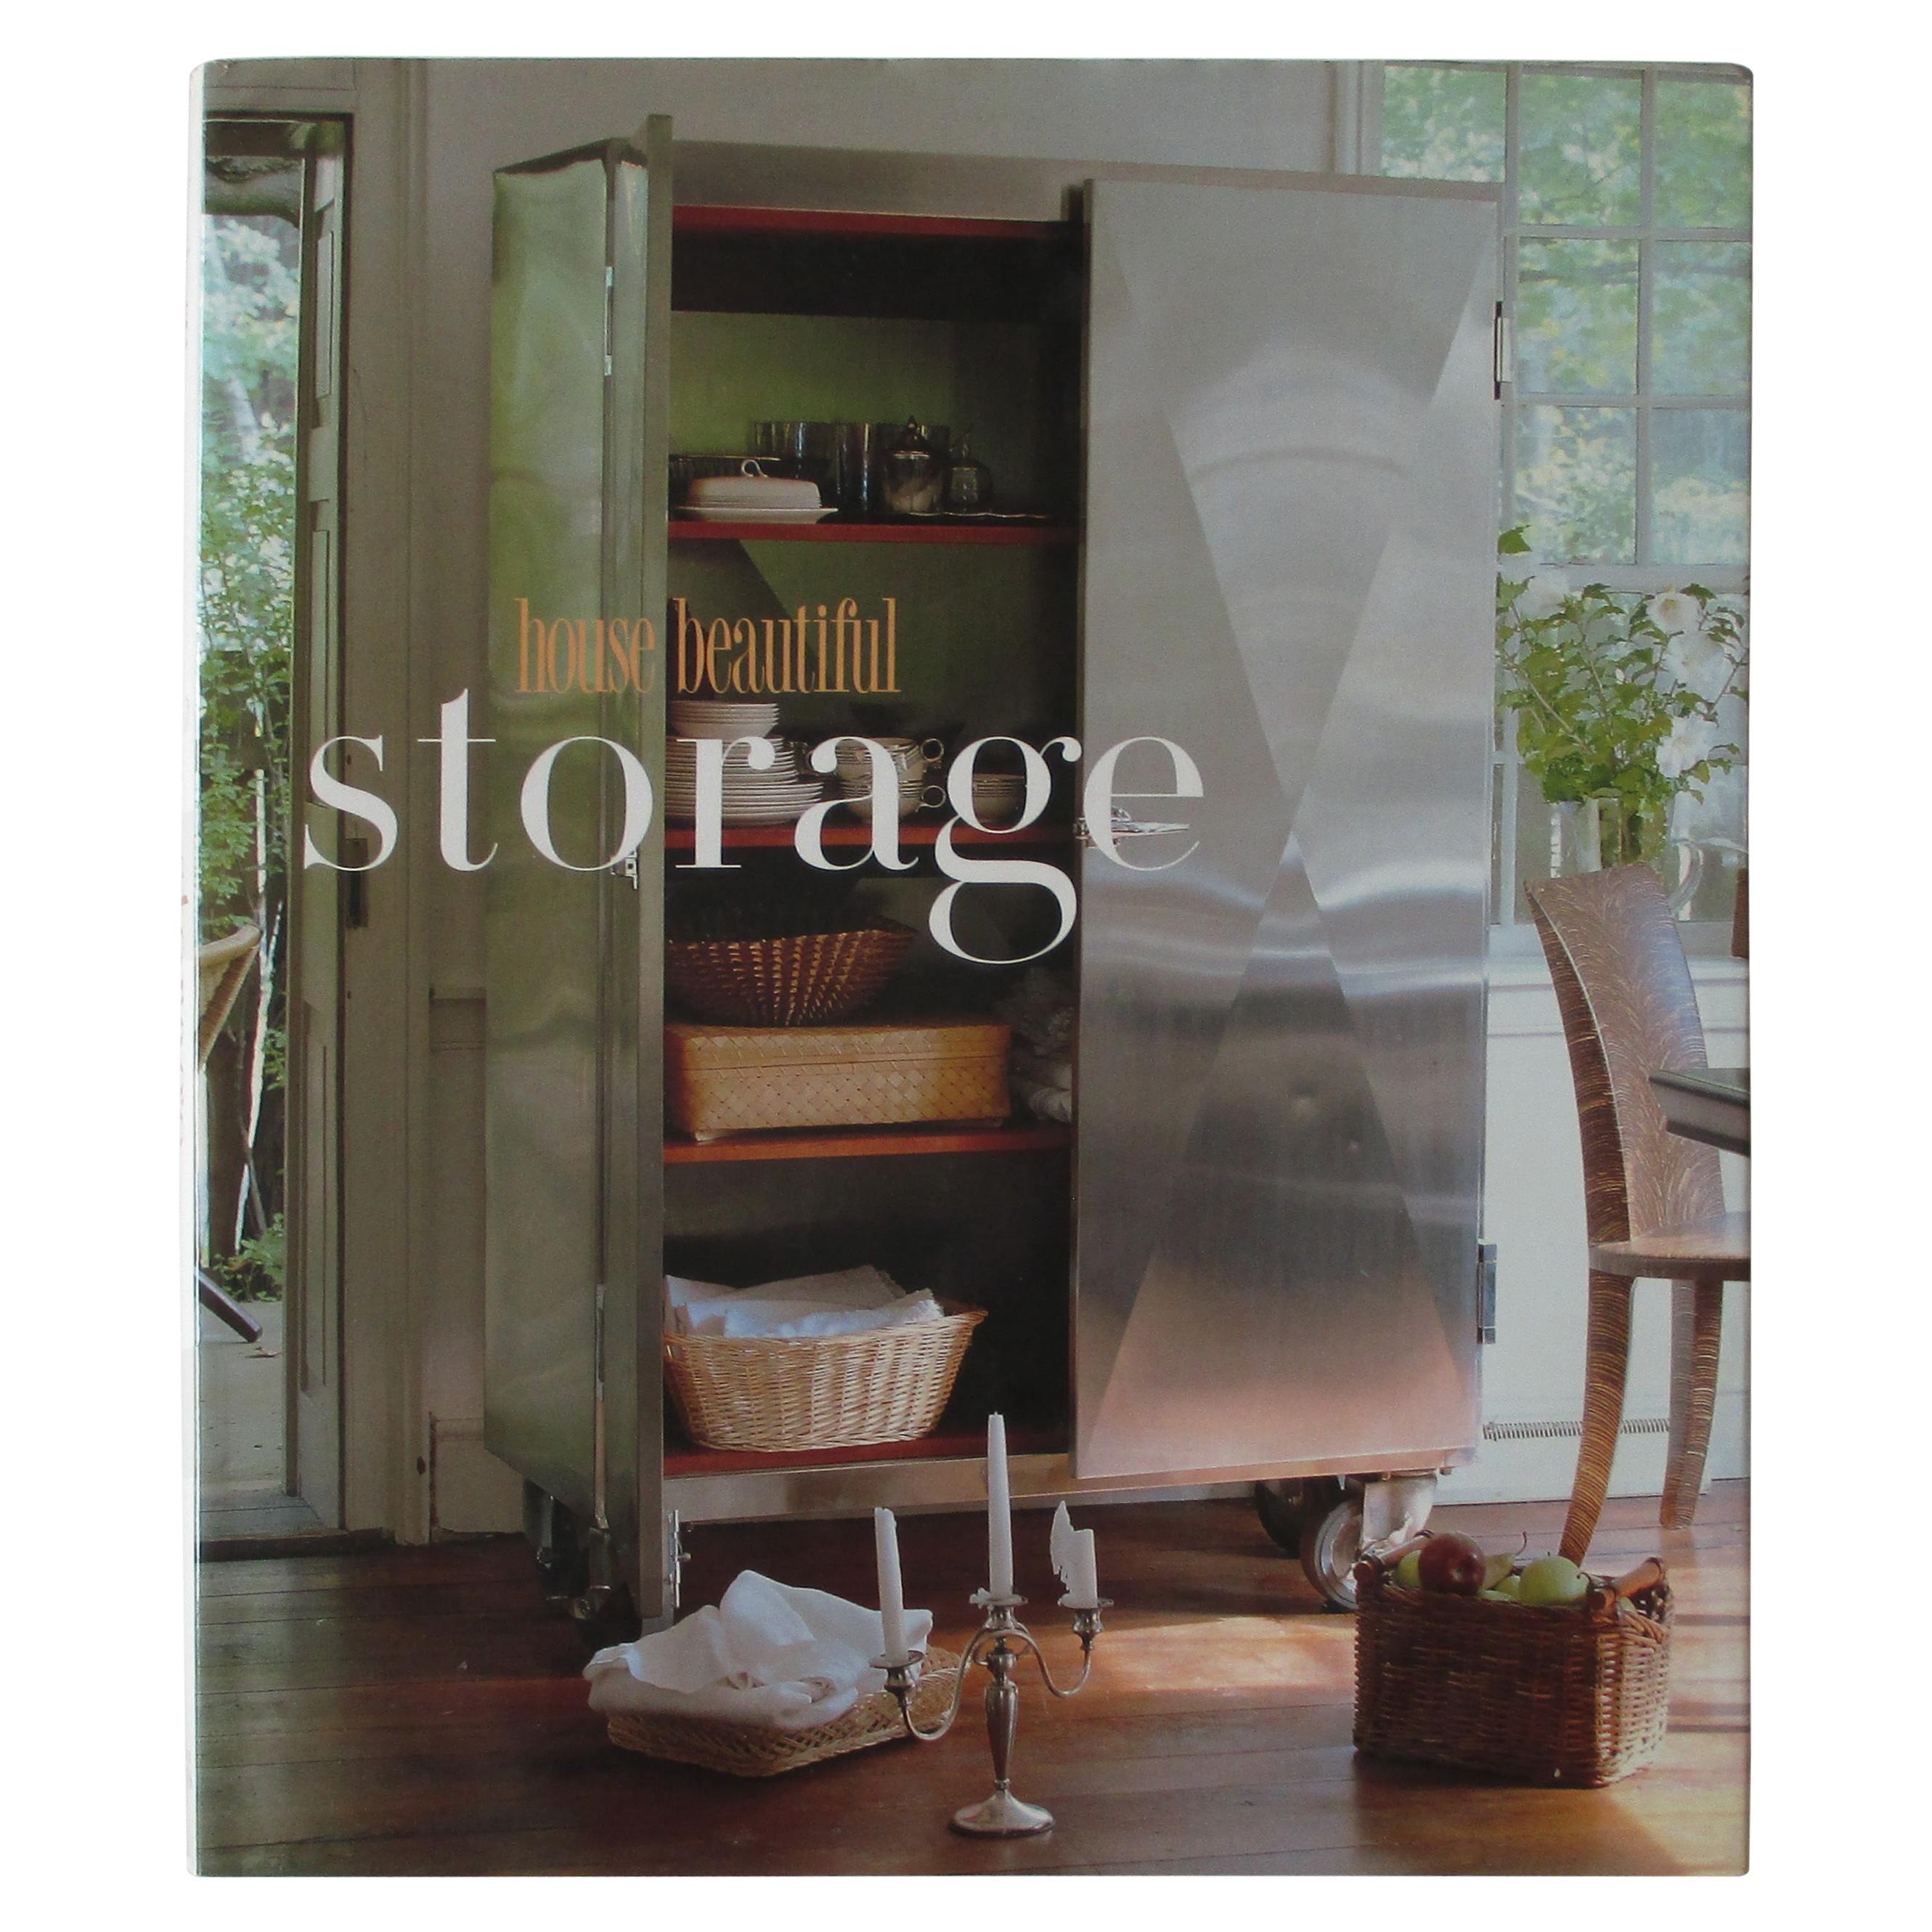 House Beautiful Storage Book